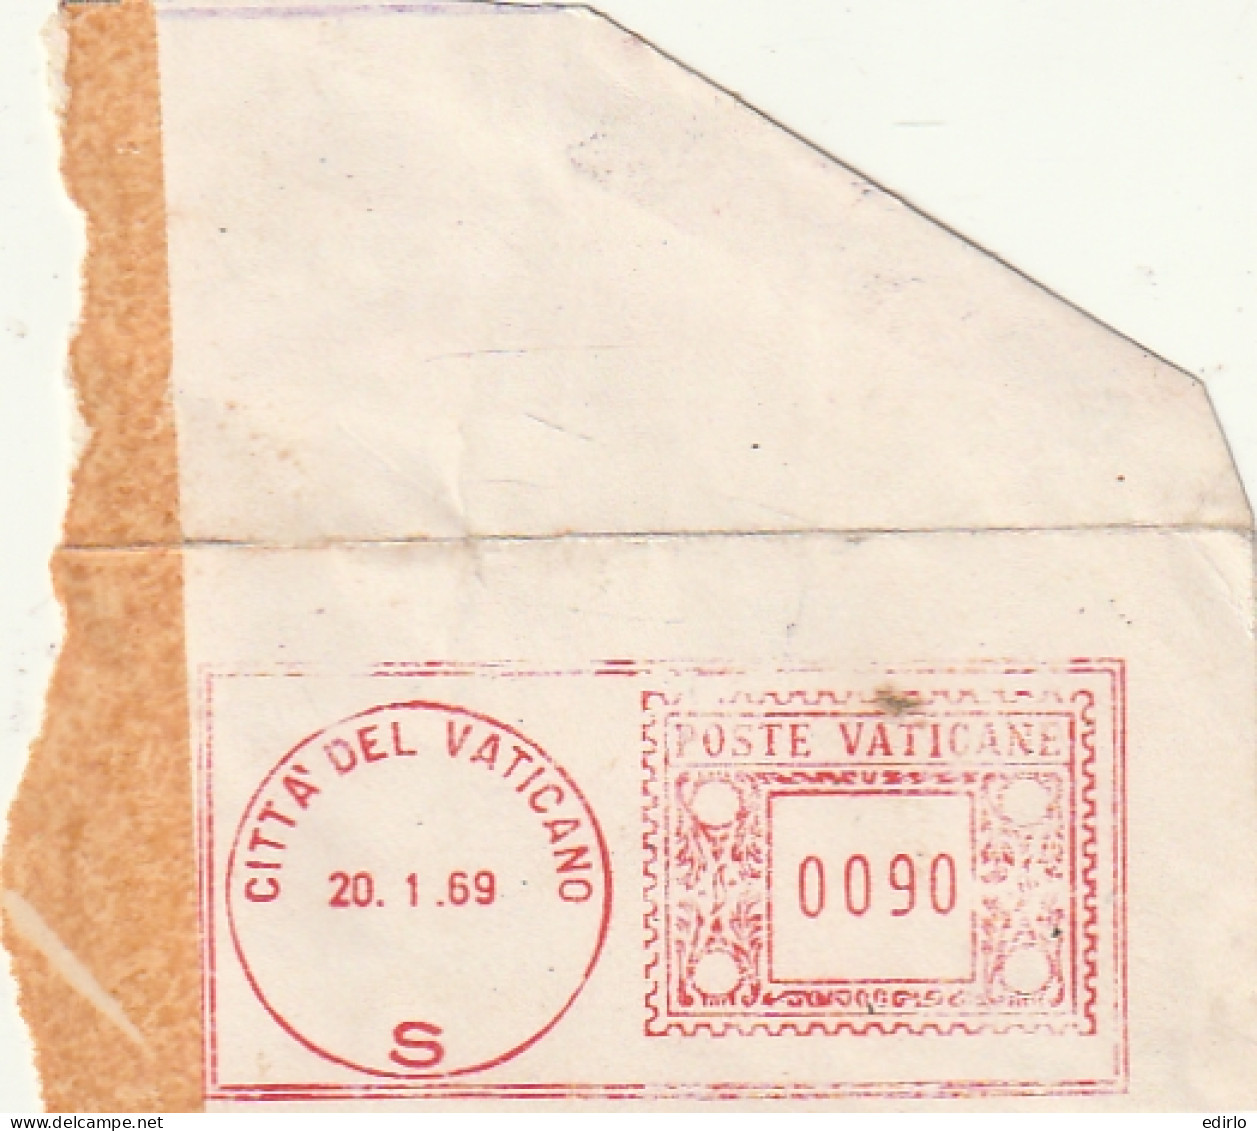 ///  VATICAN  ///   EMPREINTE TIMBRE AUTOMATIQUE 1969 - Used Stamps